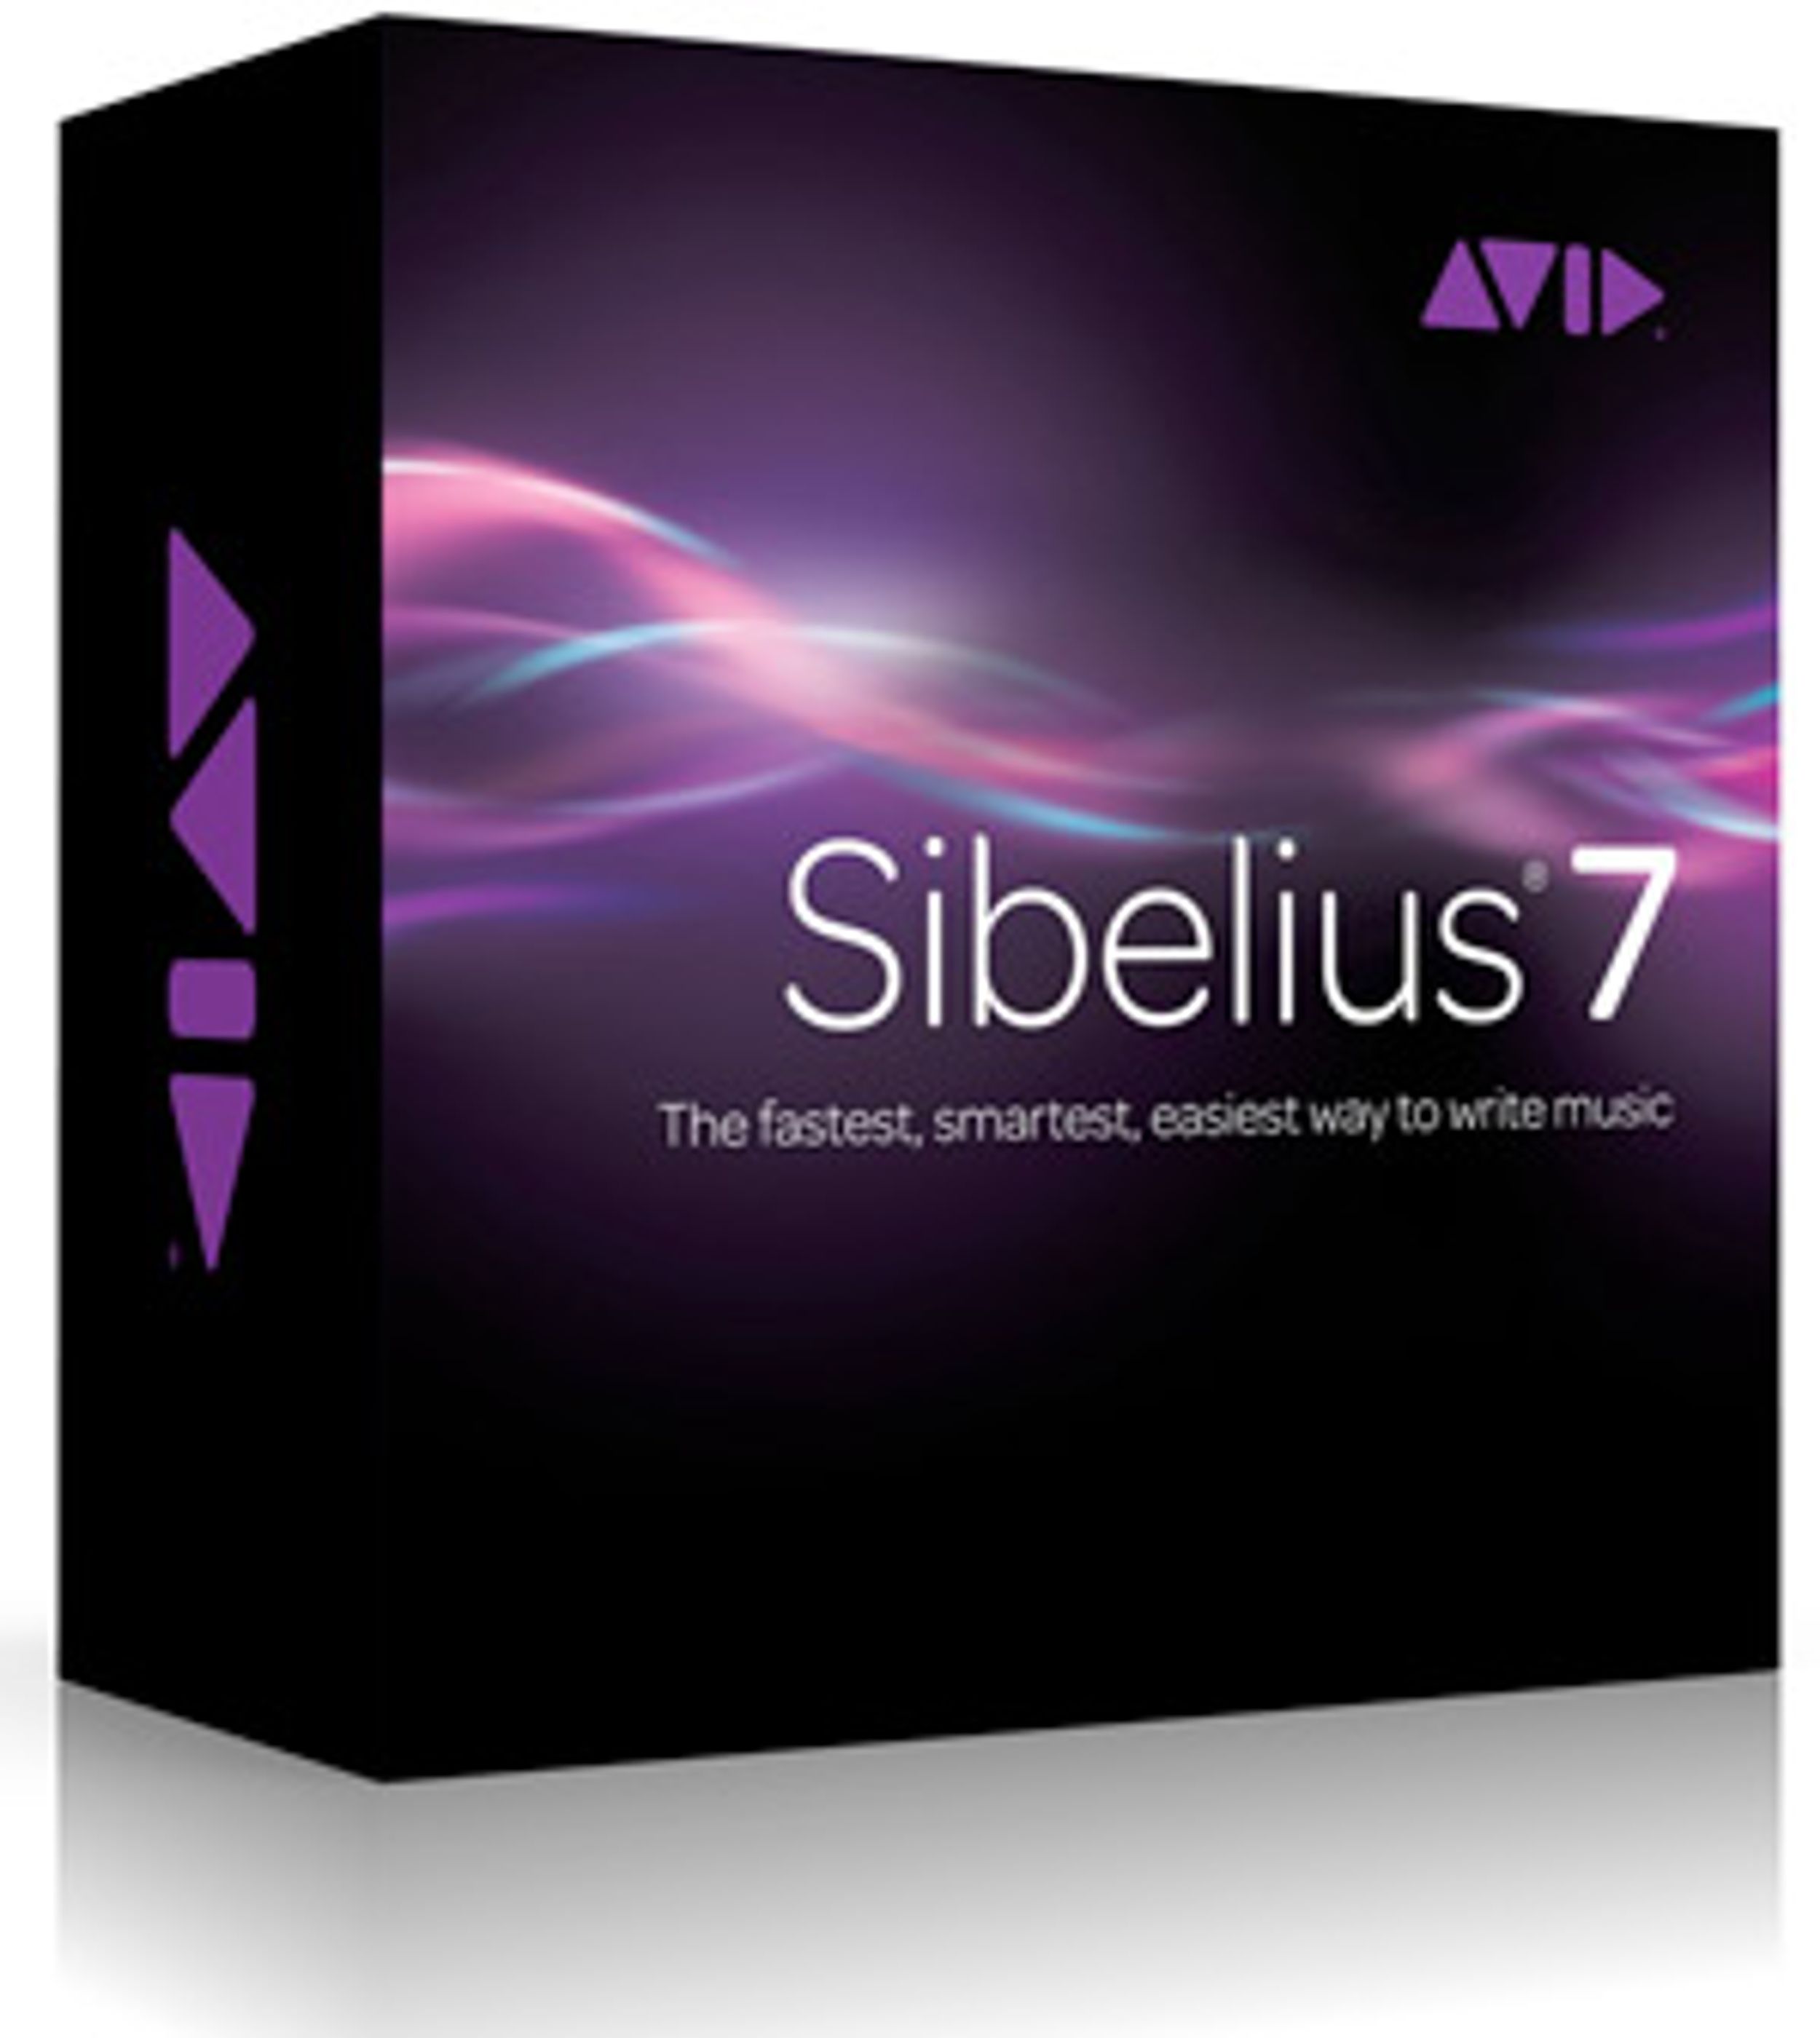 Avid Launches Sibelius 7 Musical Notation Software